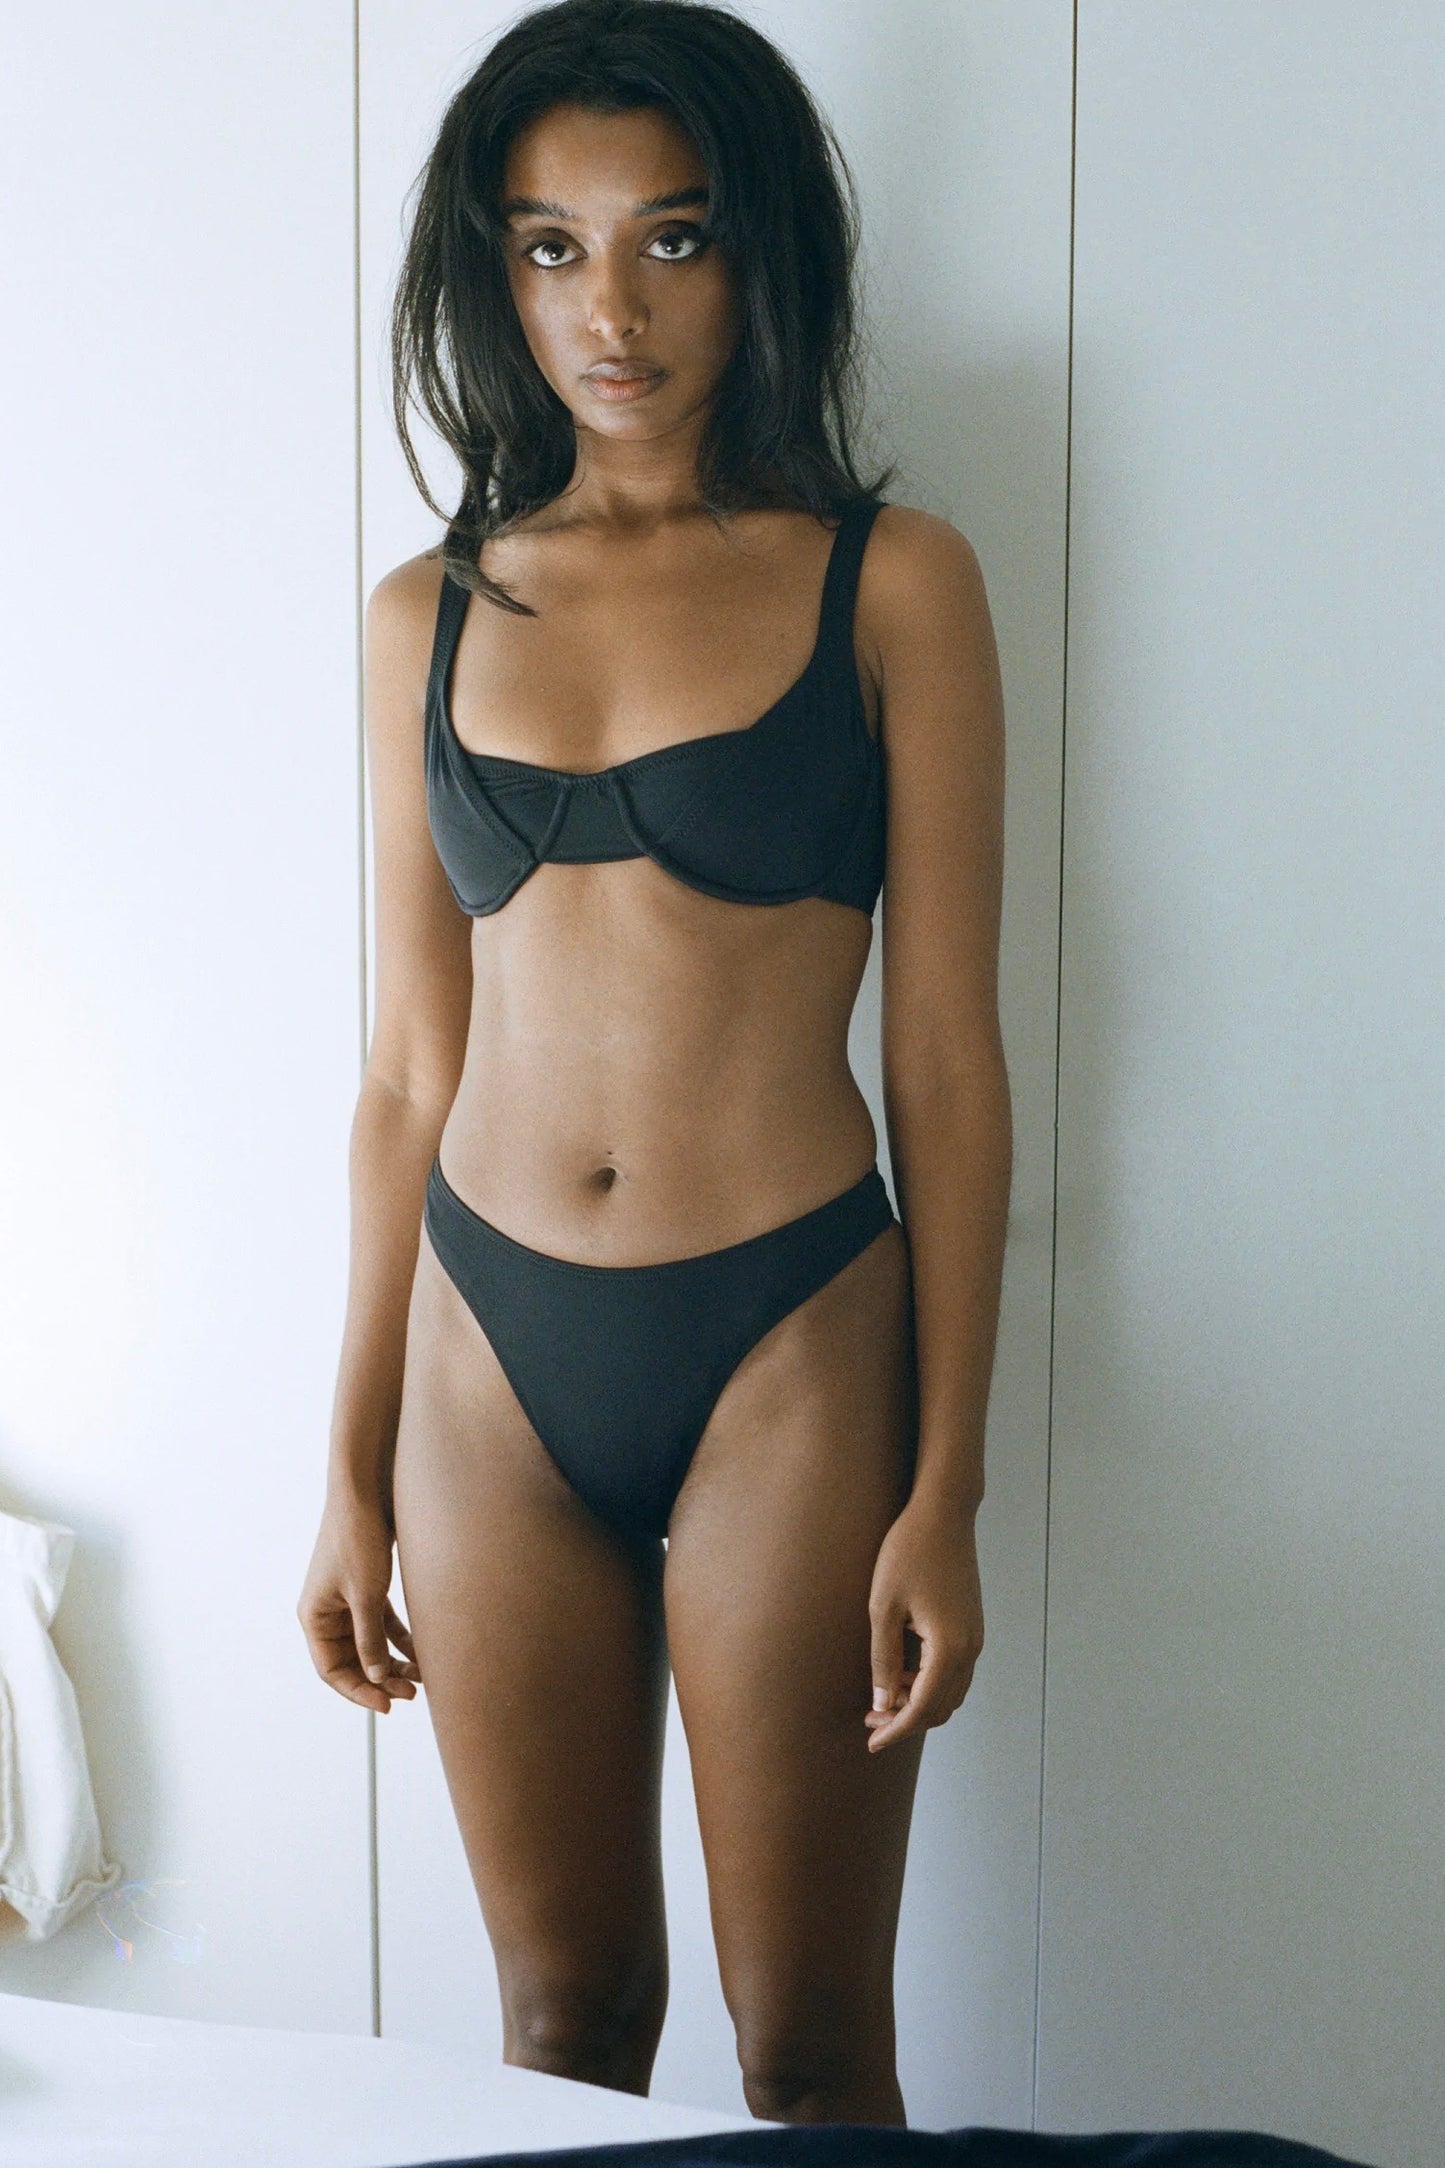 Buci- Neuve Bikini Top: Black